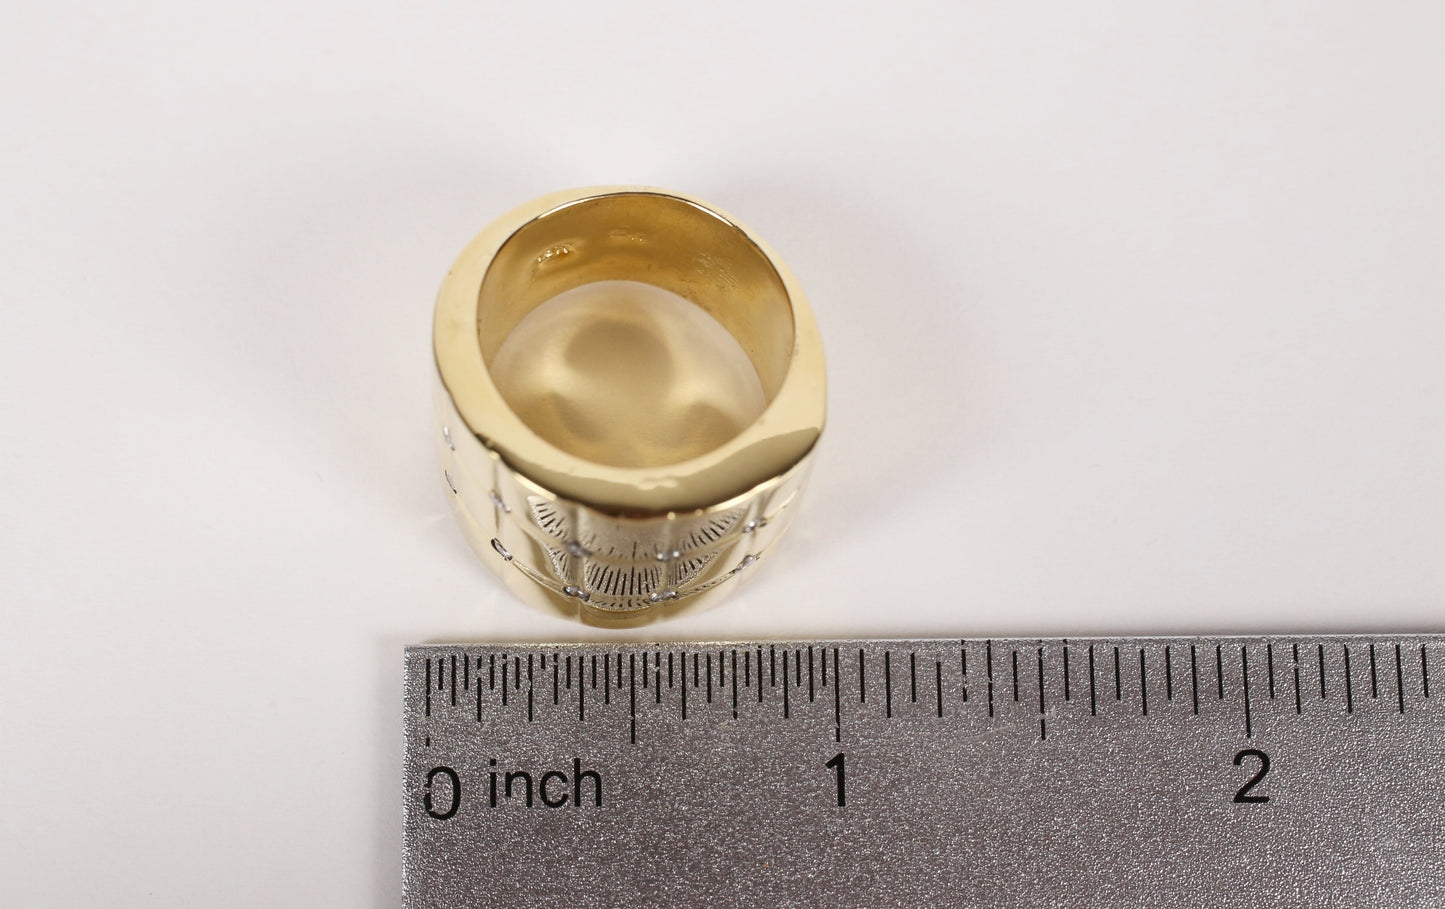 18k Yellow Gold Contemporary Diamond Ring, Size 7.25 - 20.6g